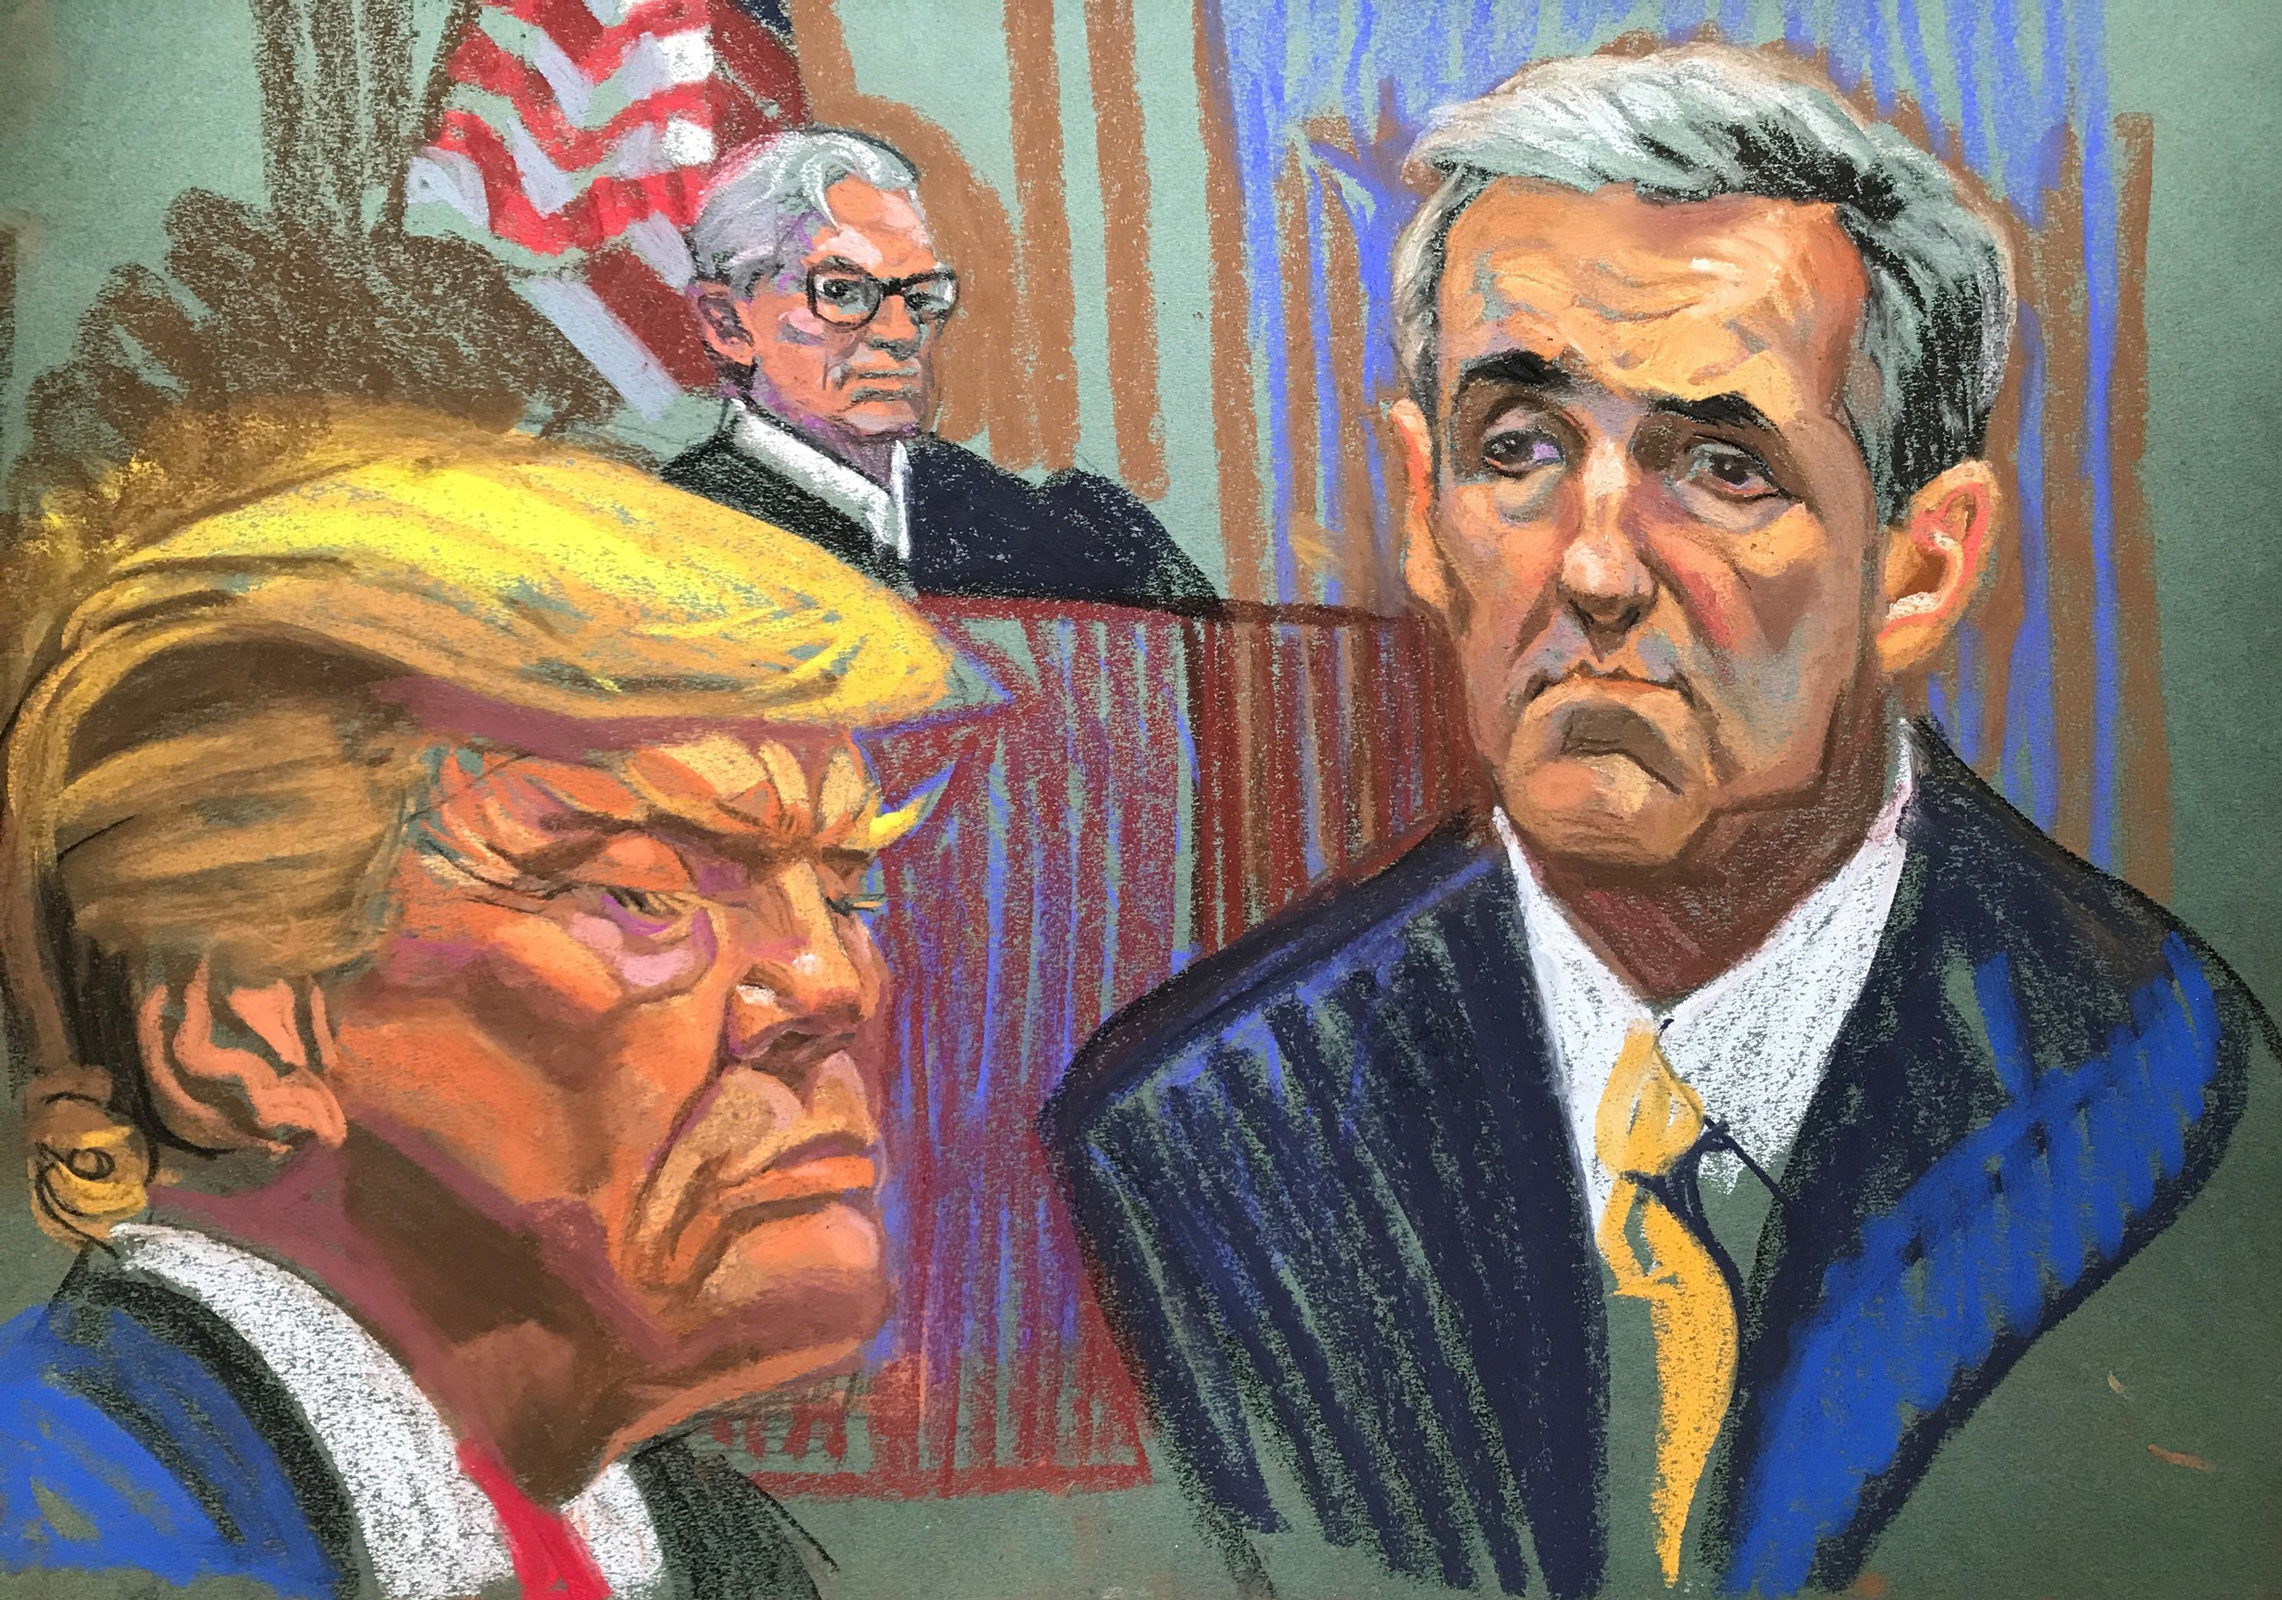 This court sketch shows former President Donald Trump, Judge Juan Merchan and Michael Cohen.